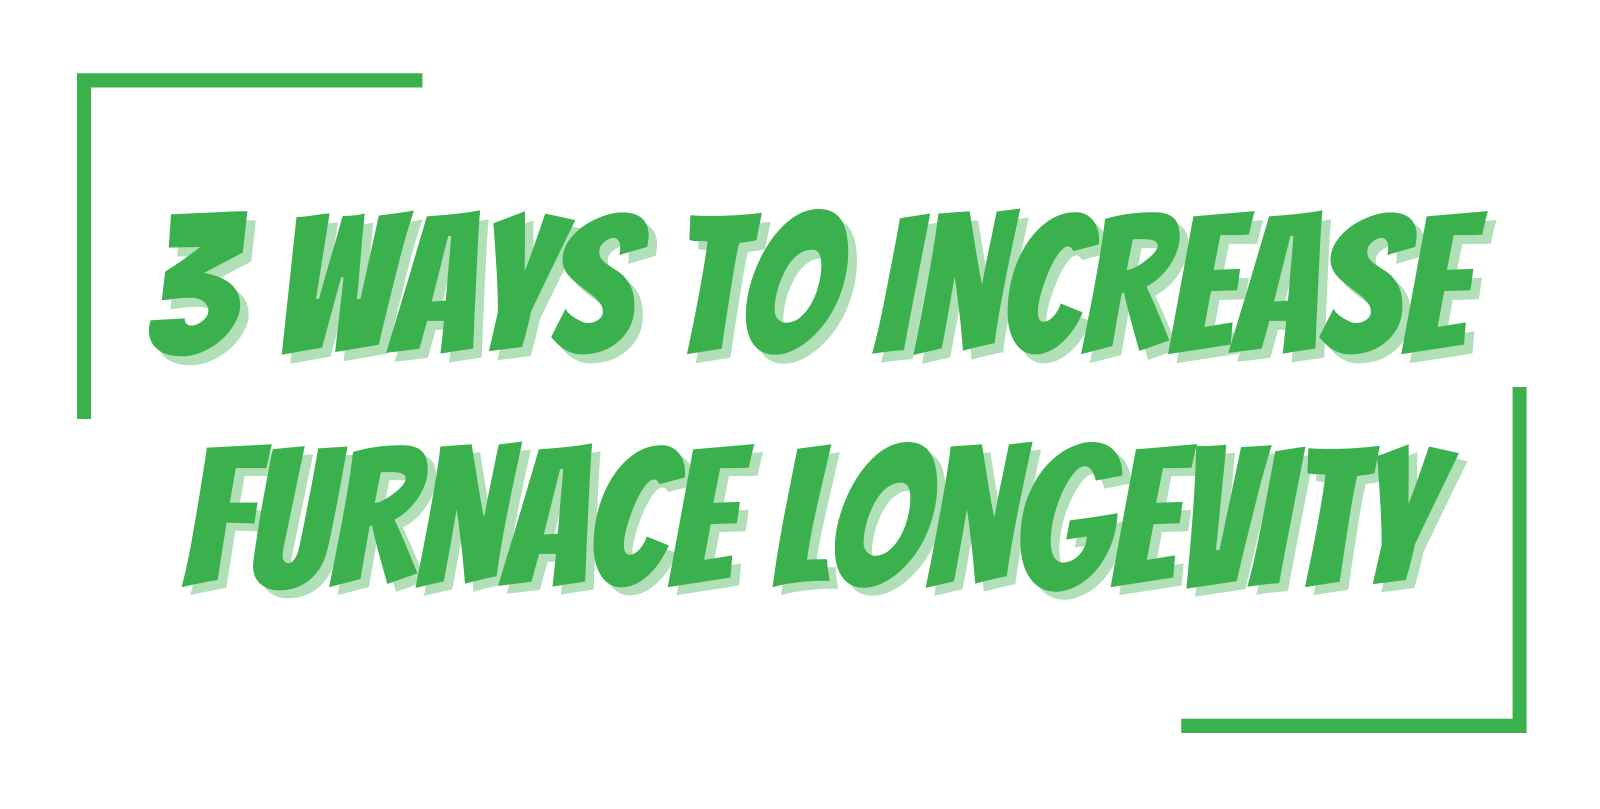 3 Ways to Increase Furnace Longevity